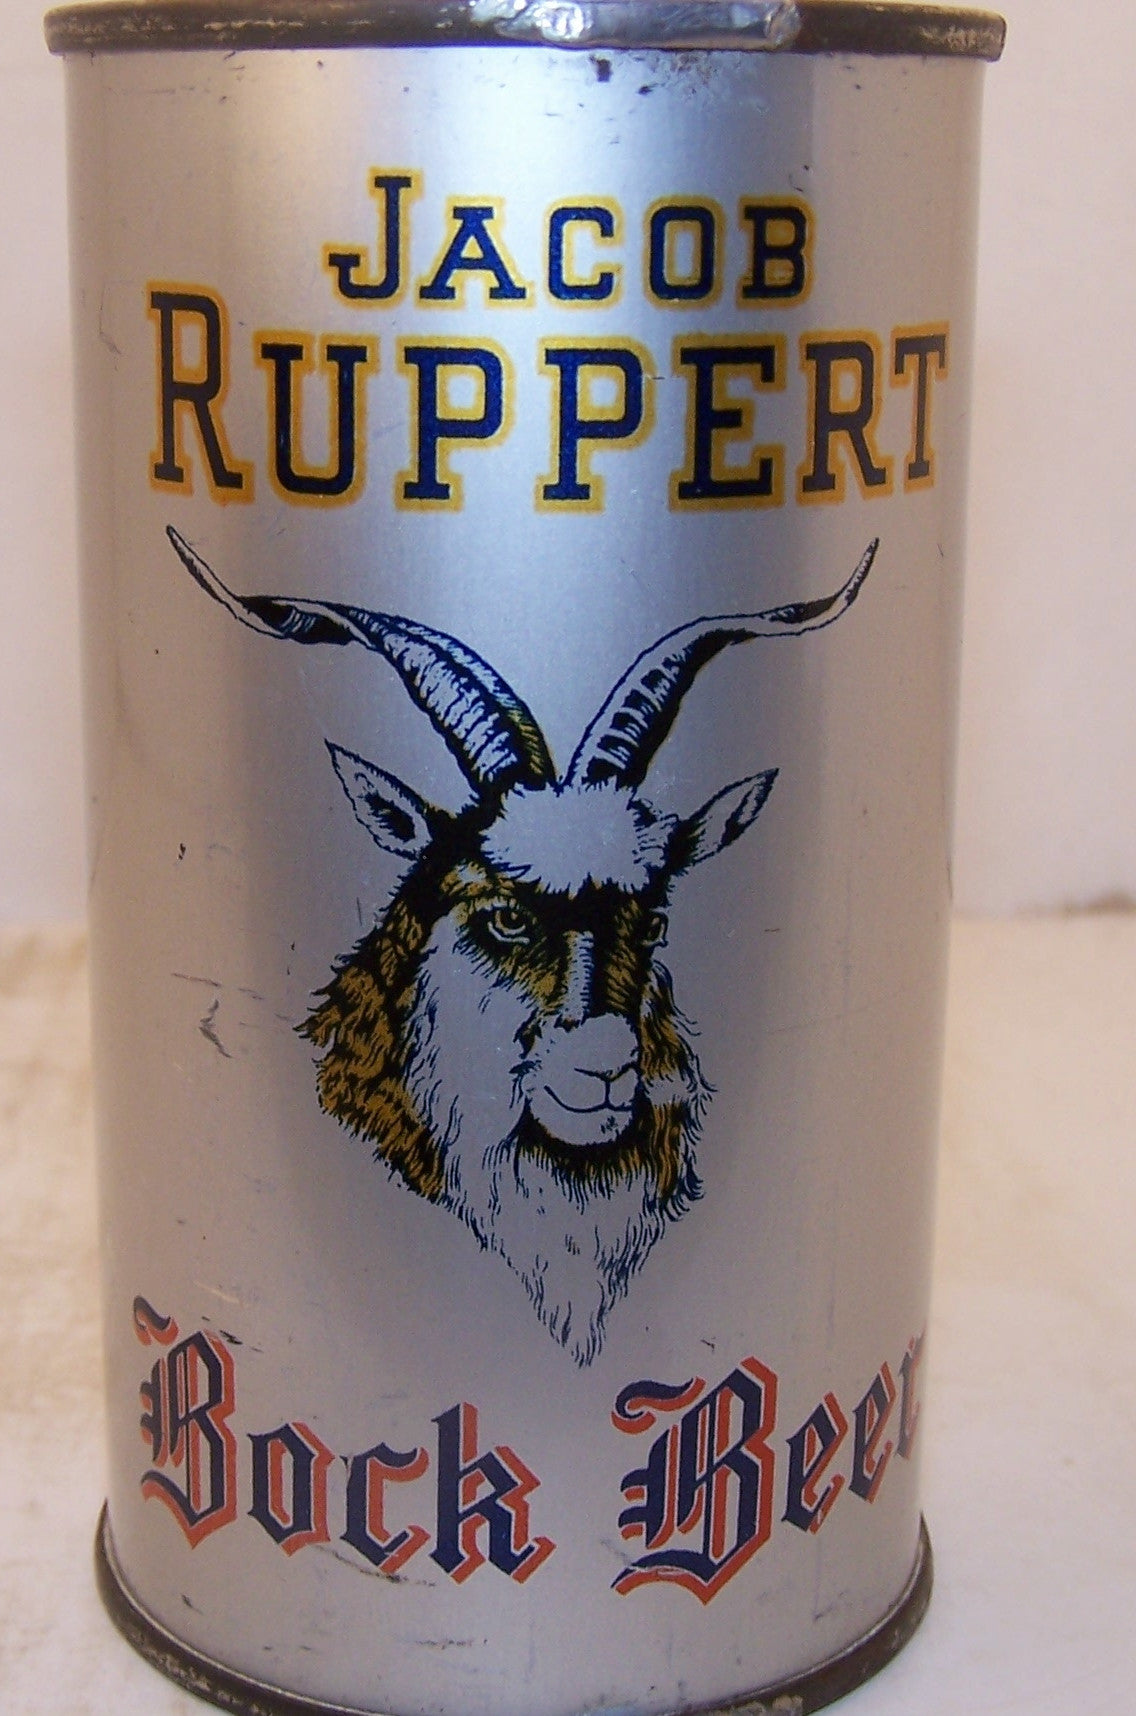 Jacob Ruppert Bock Beer, Lilek page 447 Grade 1 sold on eBay.